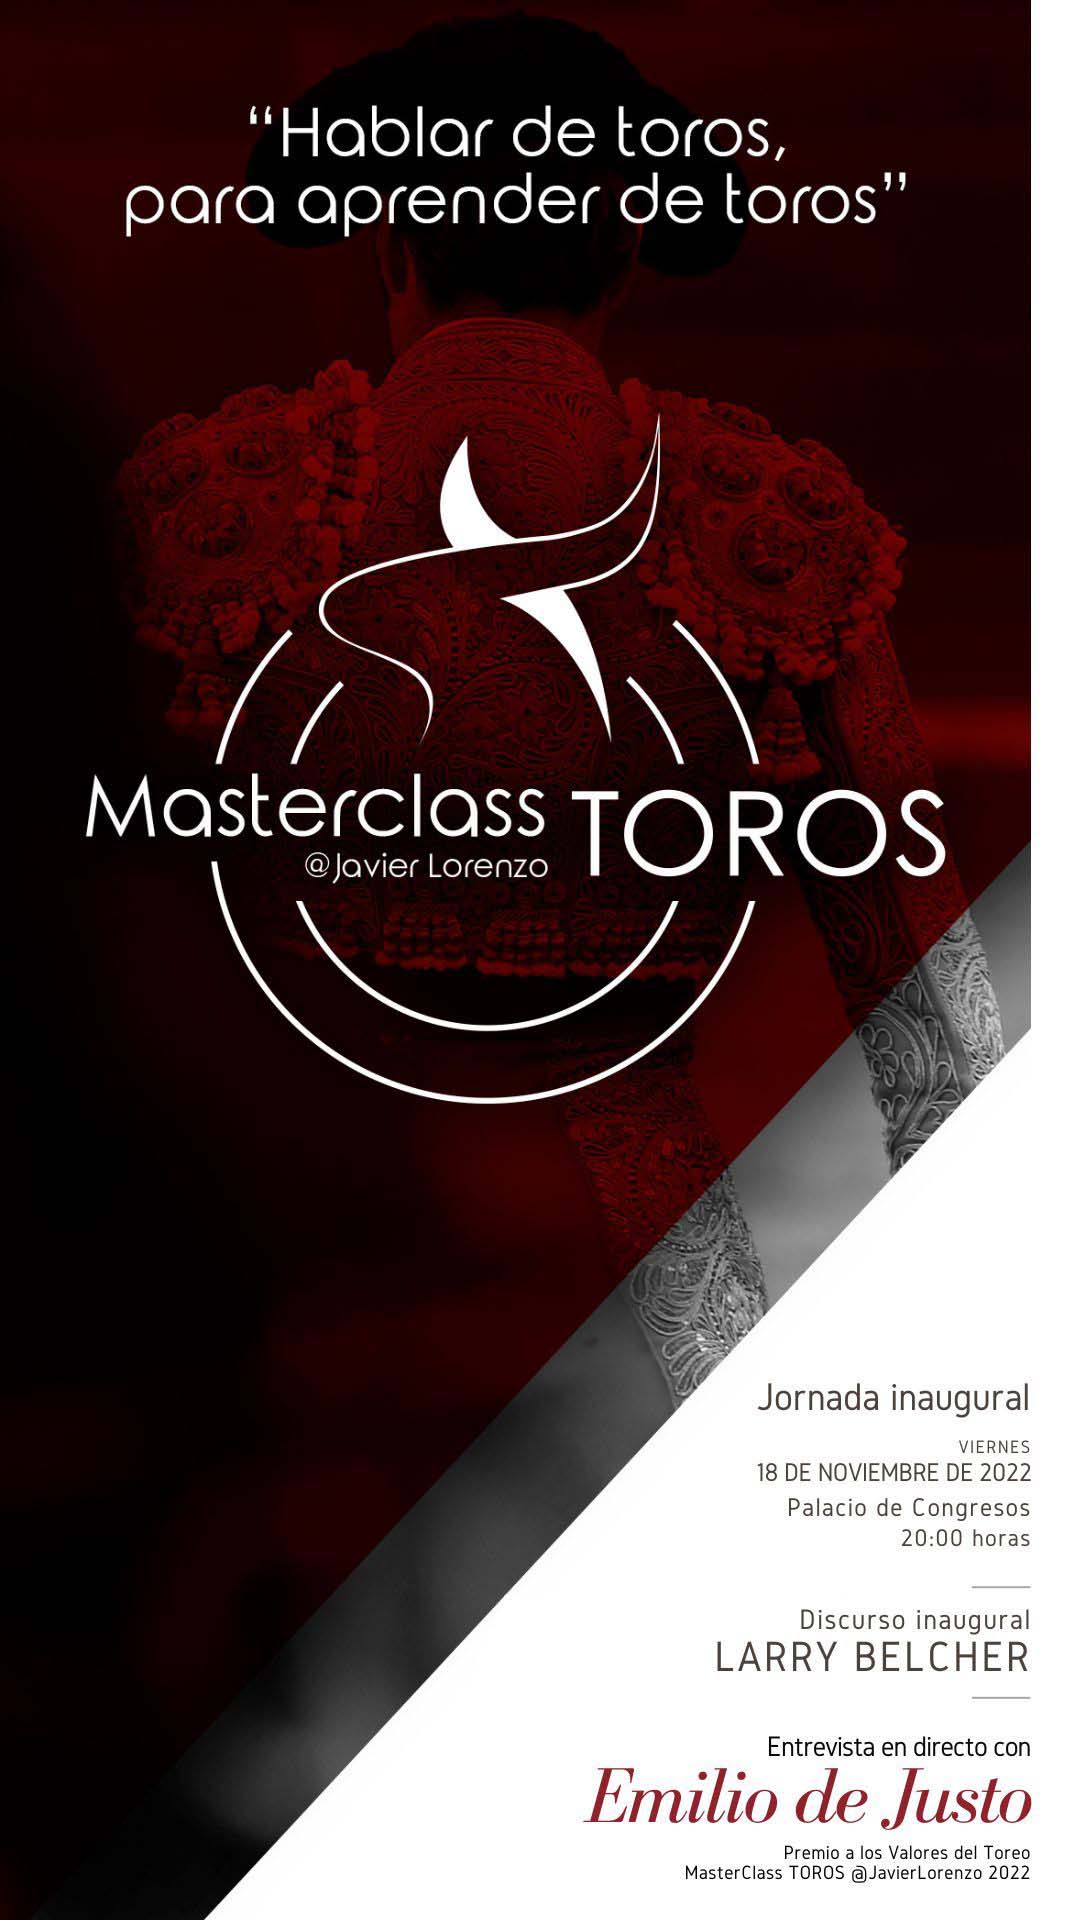 Masterclass Toros Javier Lorenzo Palacio de Congresos de Salamanca